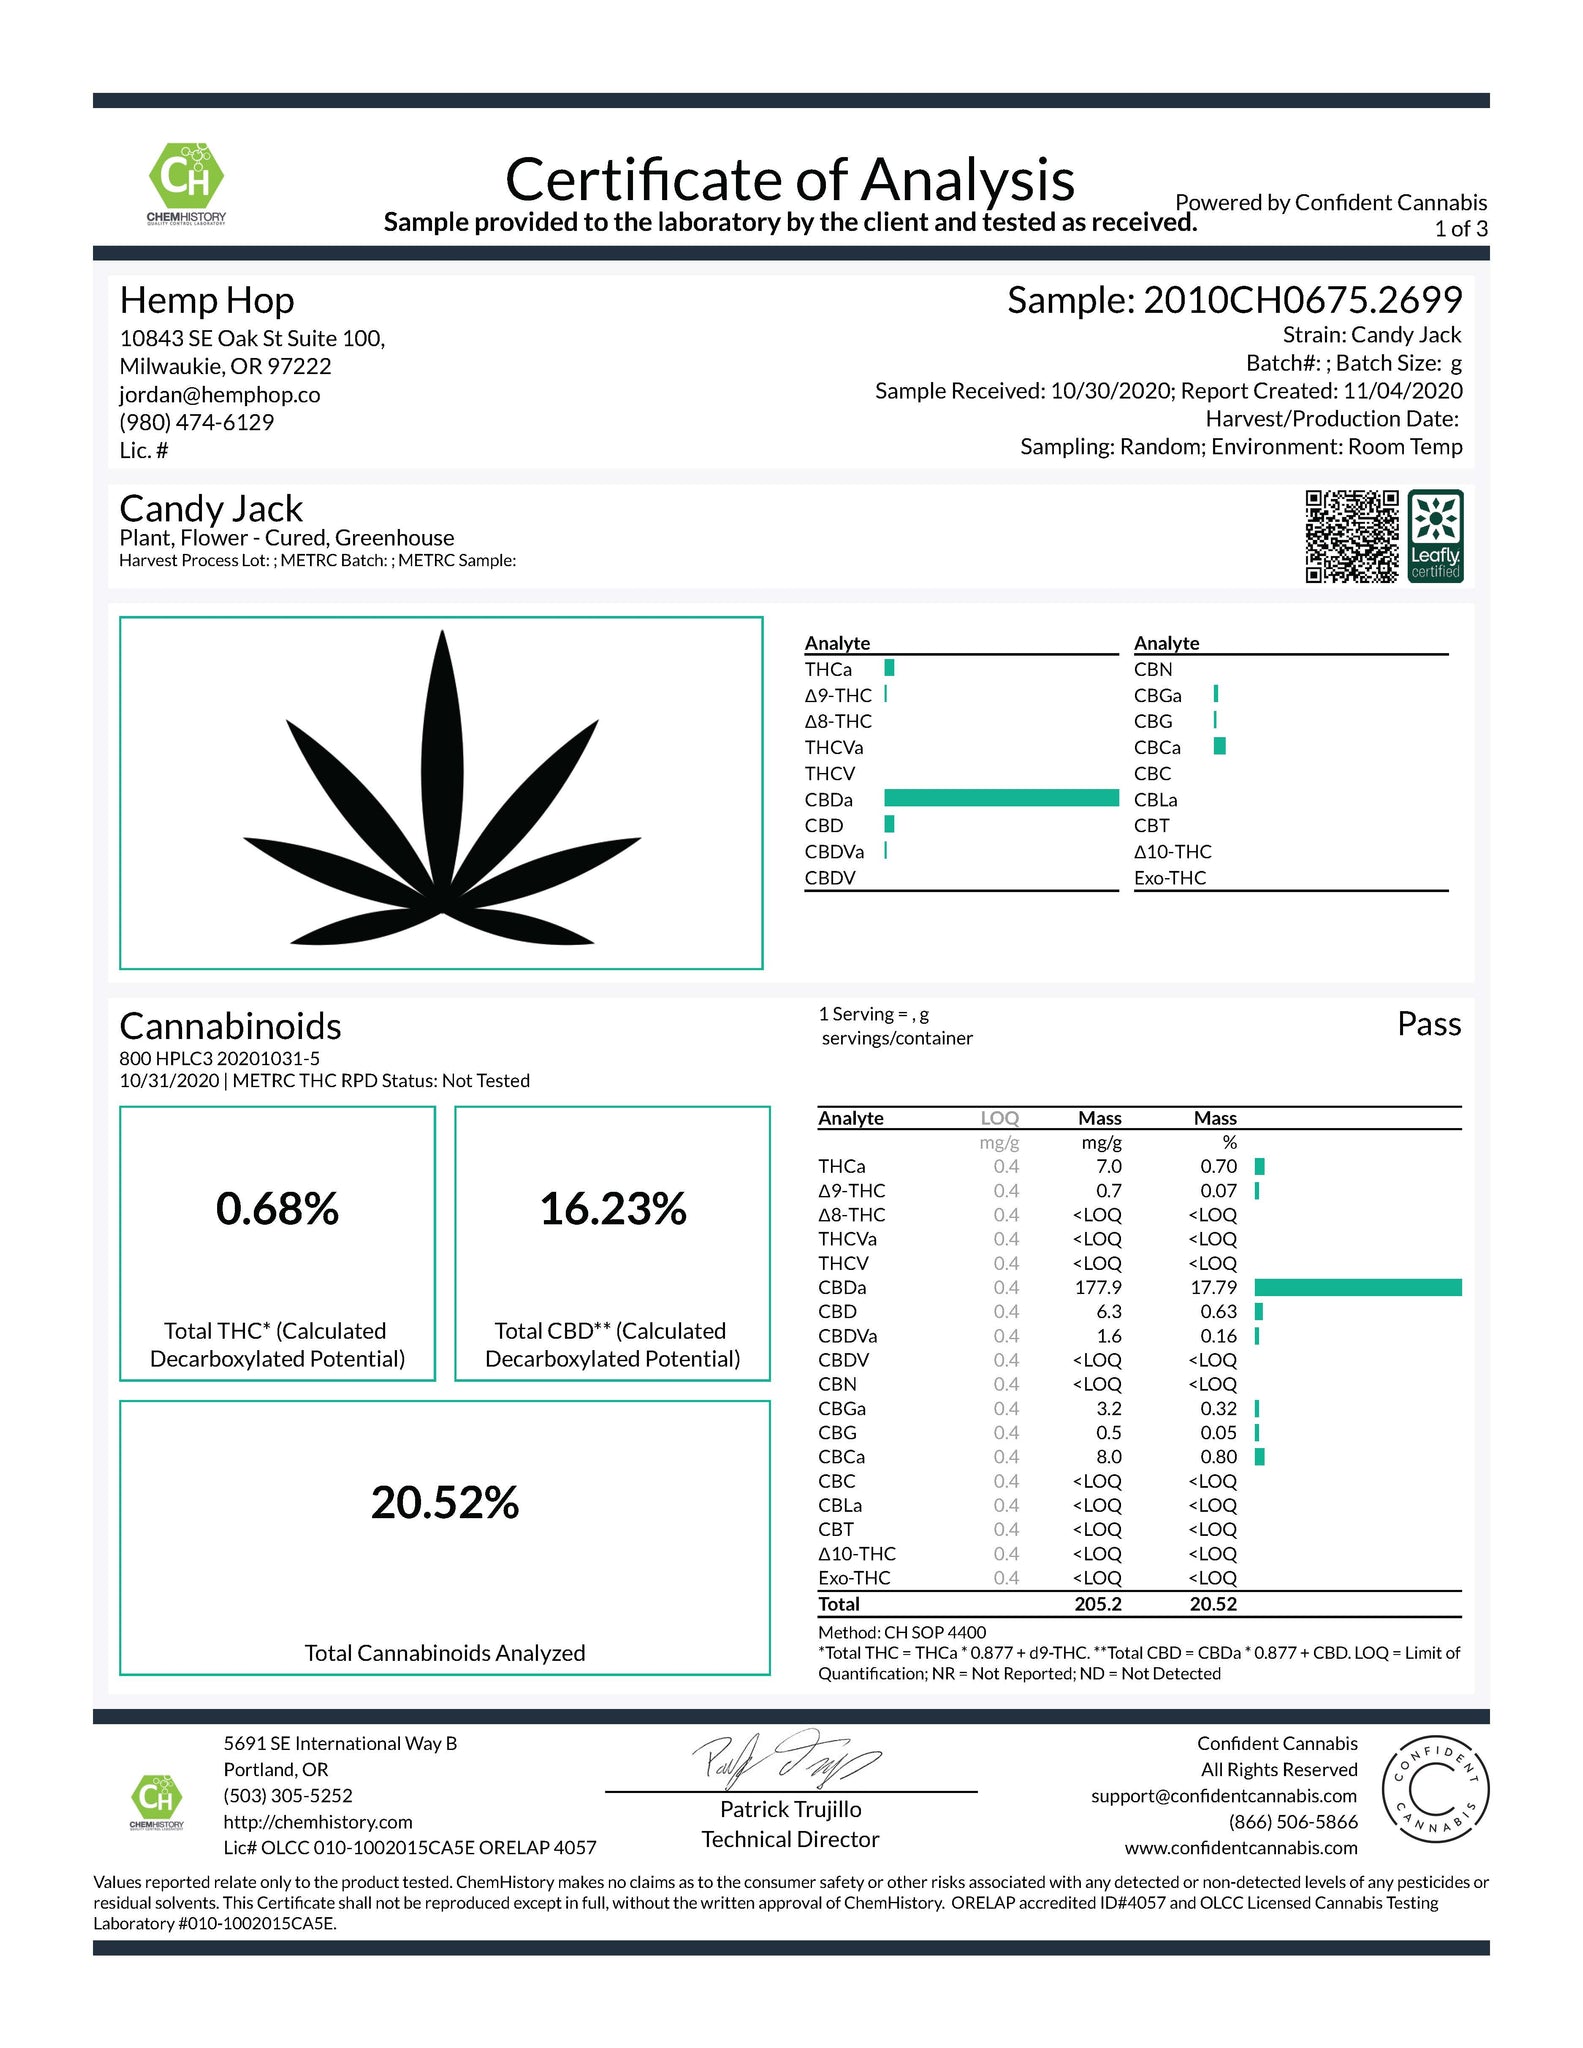 Candy Jack CBD hemp flower cannabinoid lab results